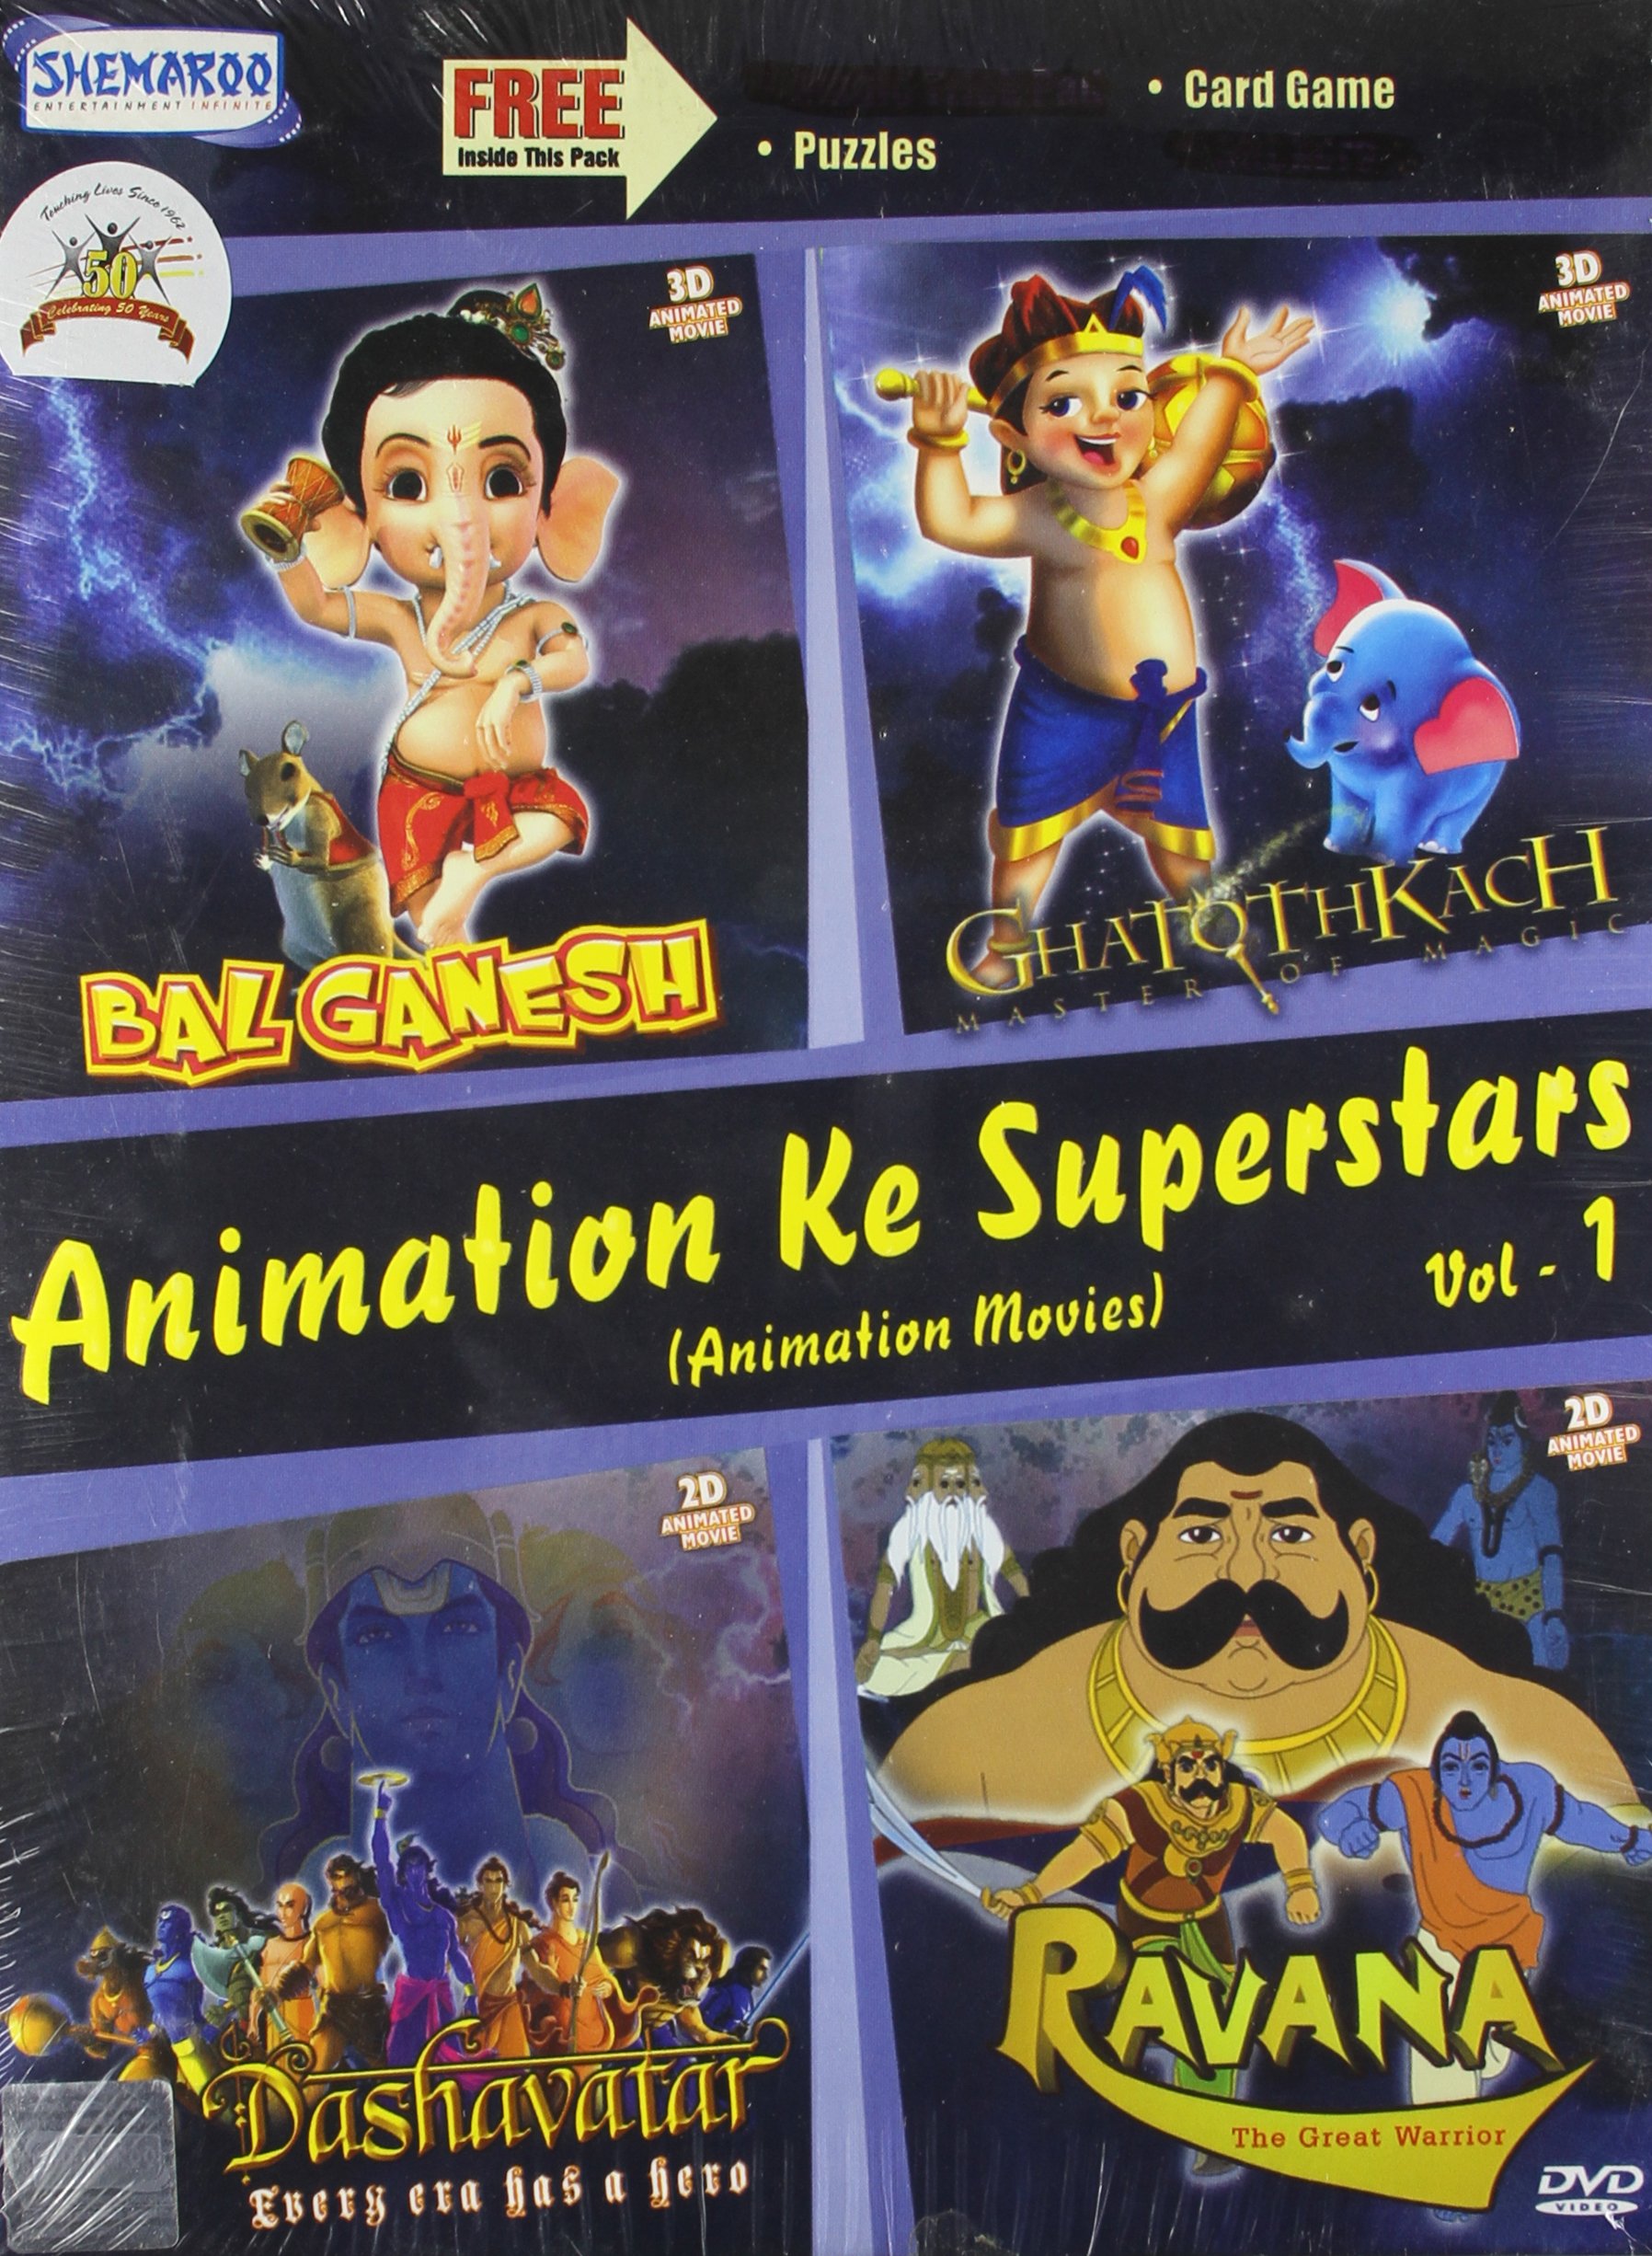 animation-ke-superstars-vol-1-movie-purchase-or-watch-online